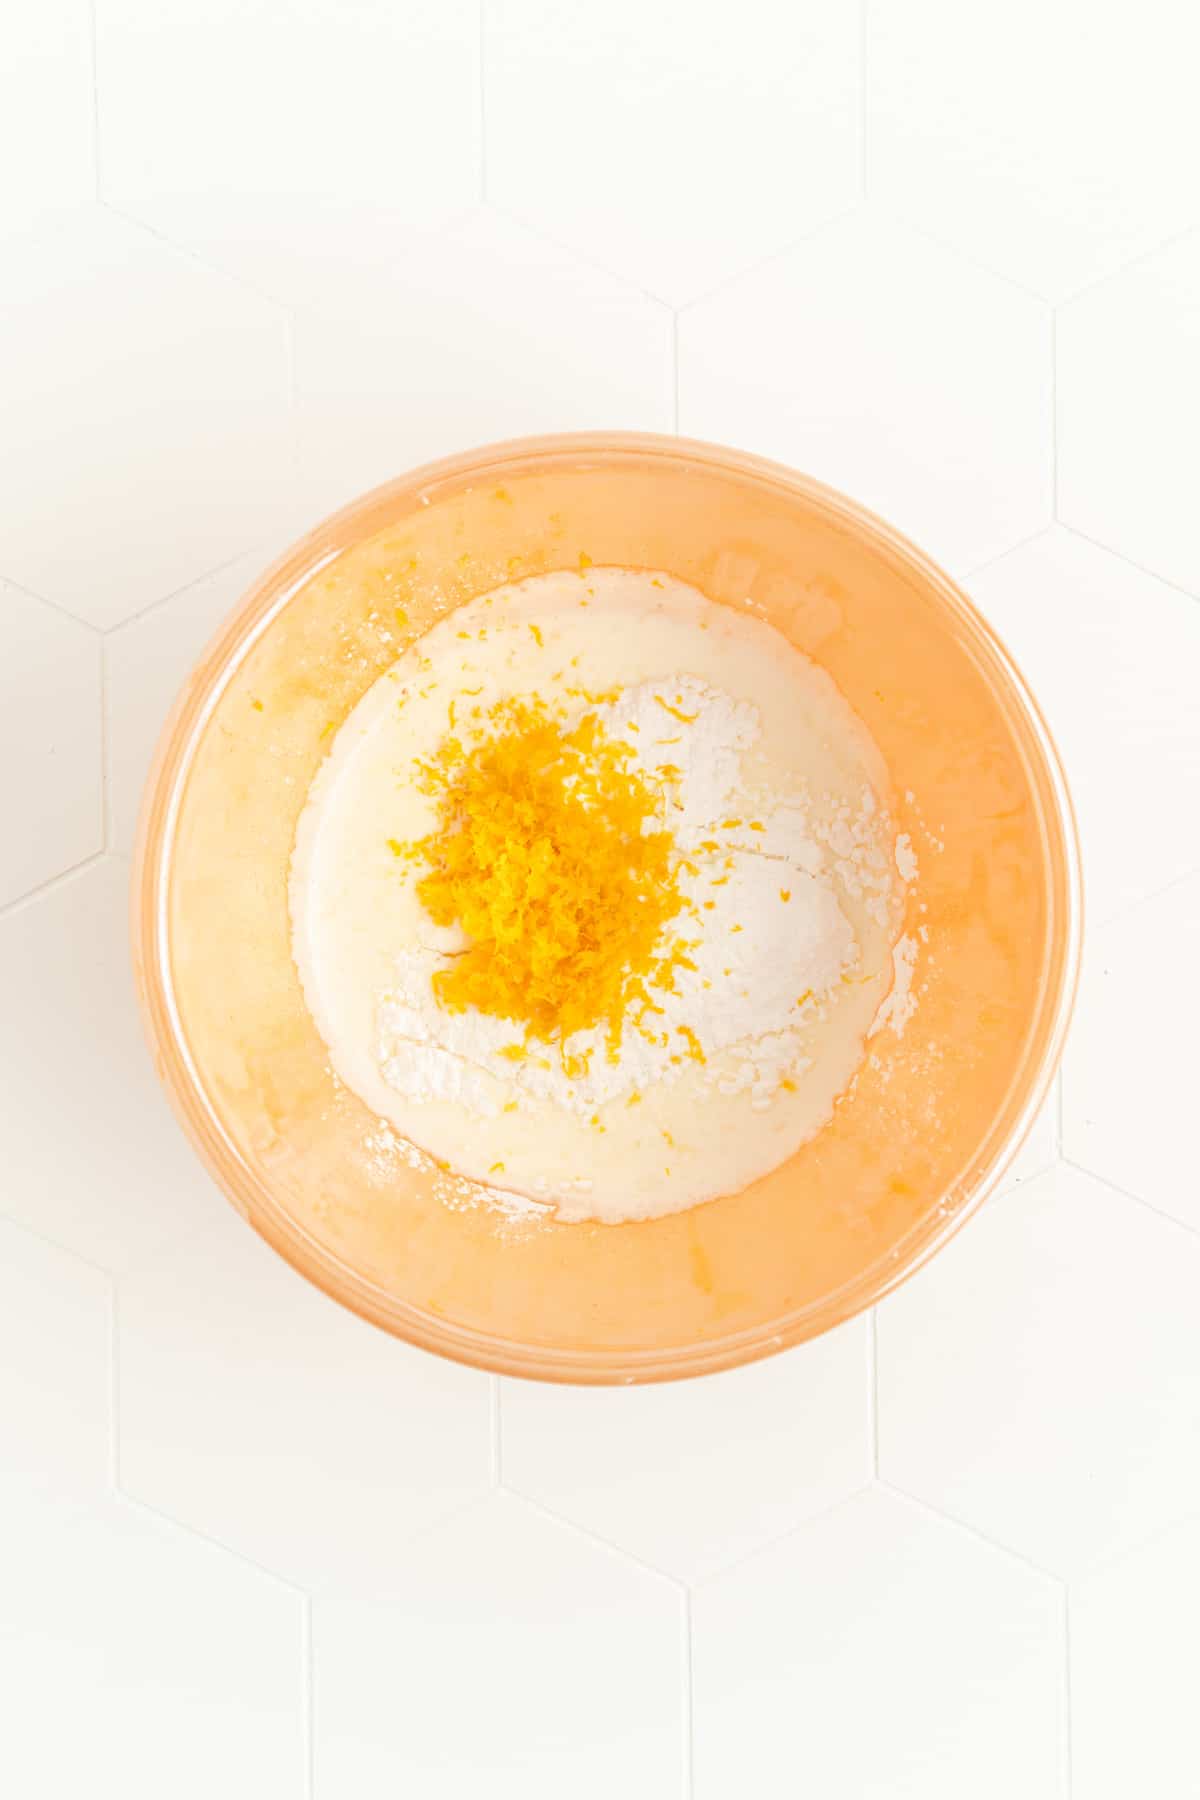 ingredients for fresh lemon whipped cream in an orange mixing bowl